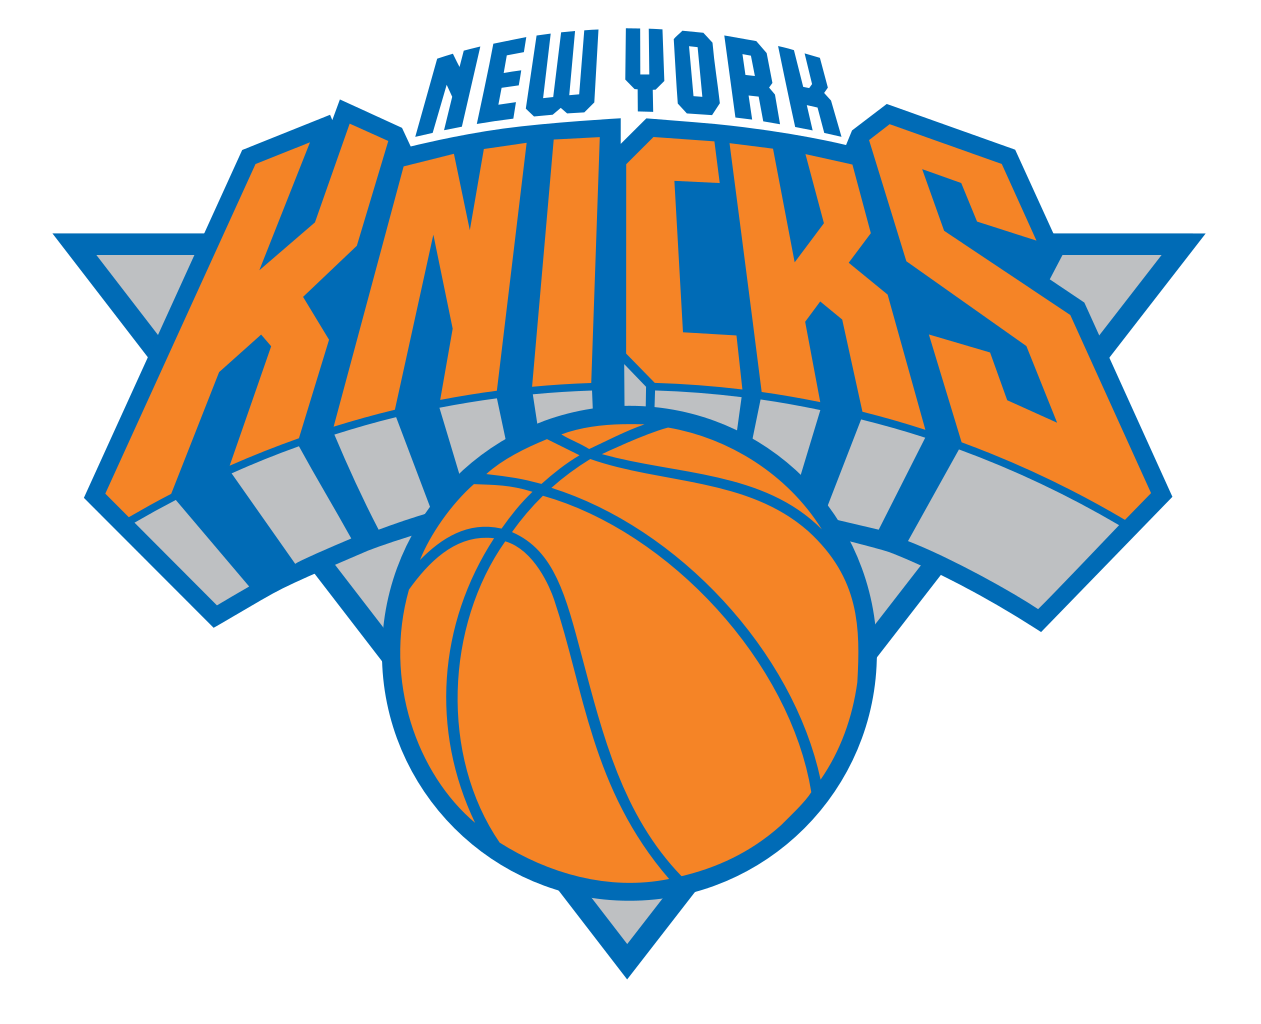 1261px-New_York_Knicks_logo.svg